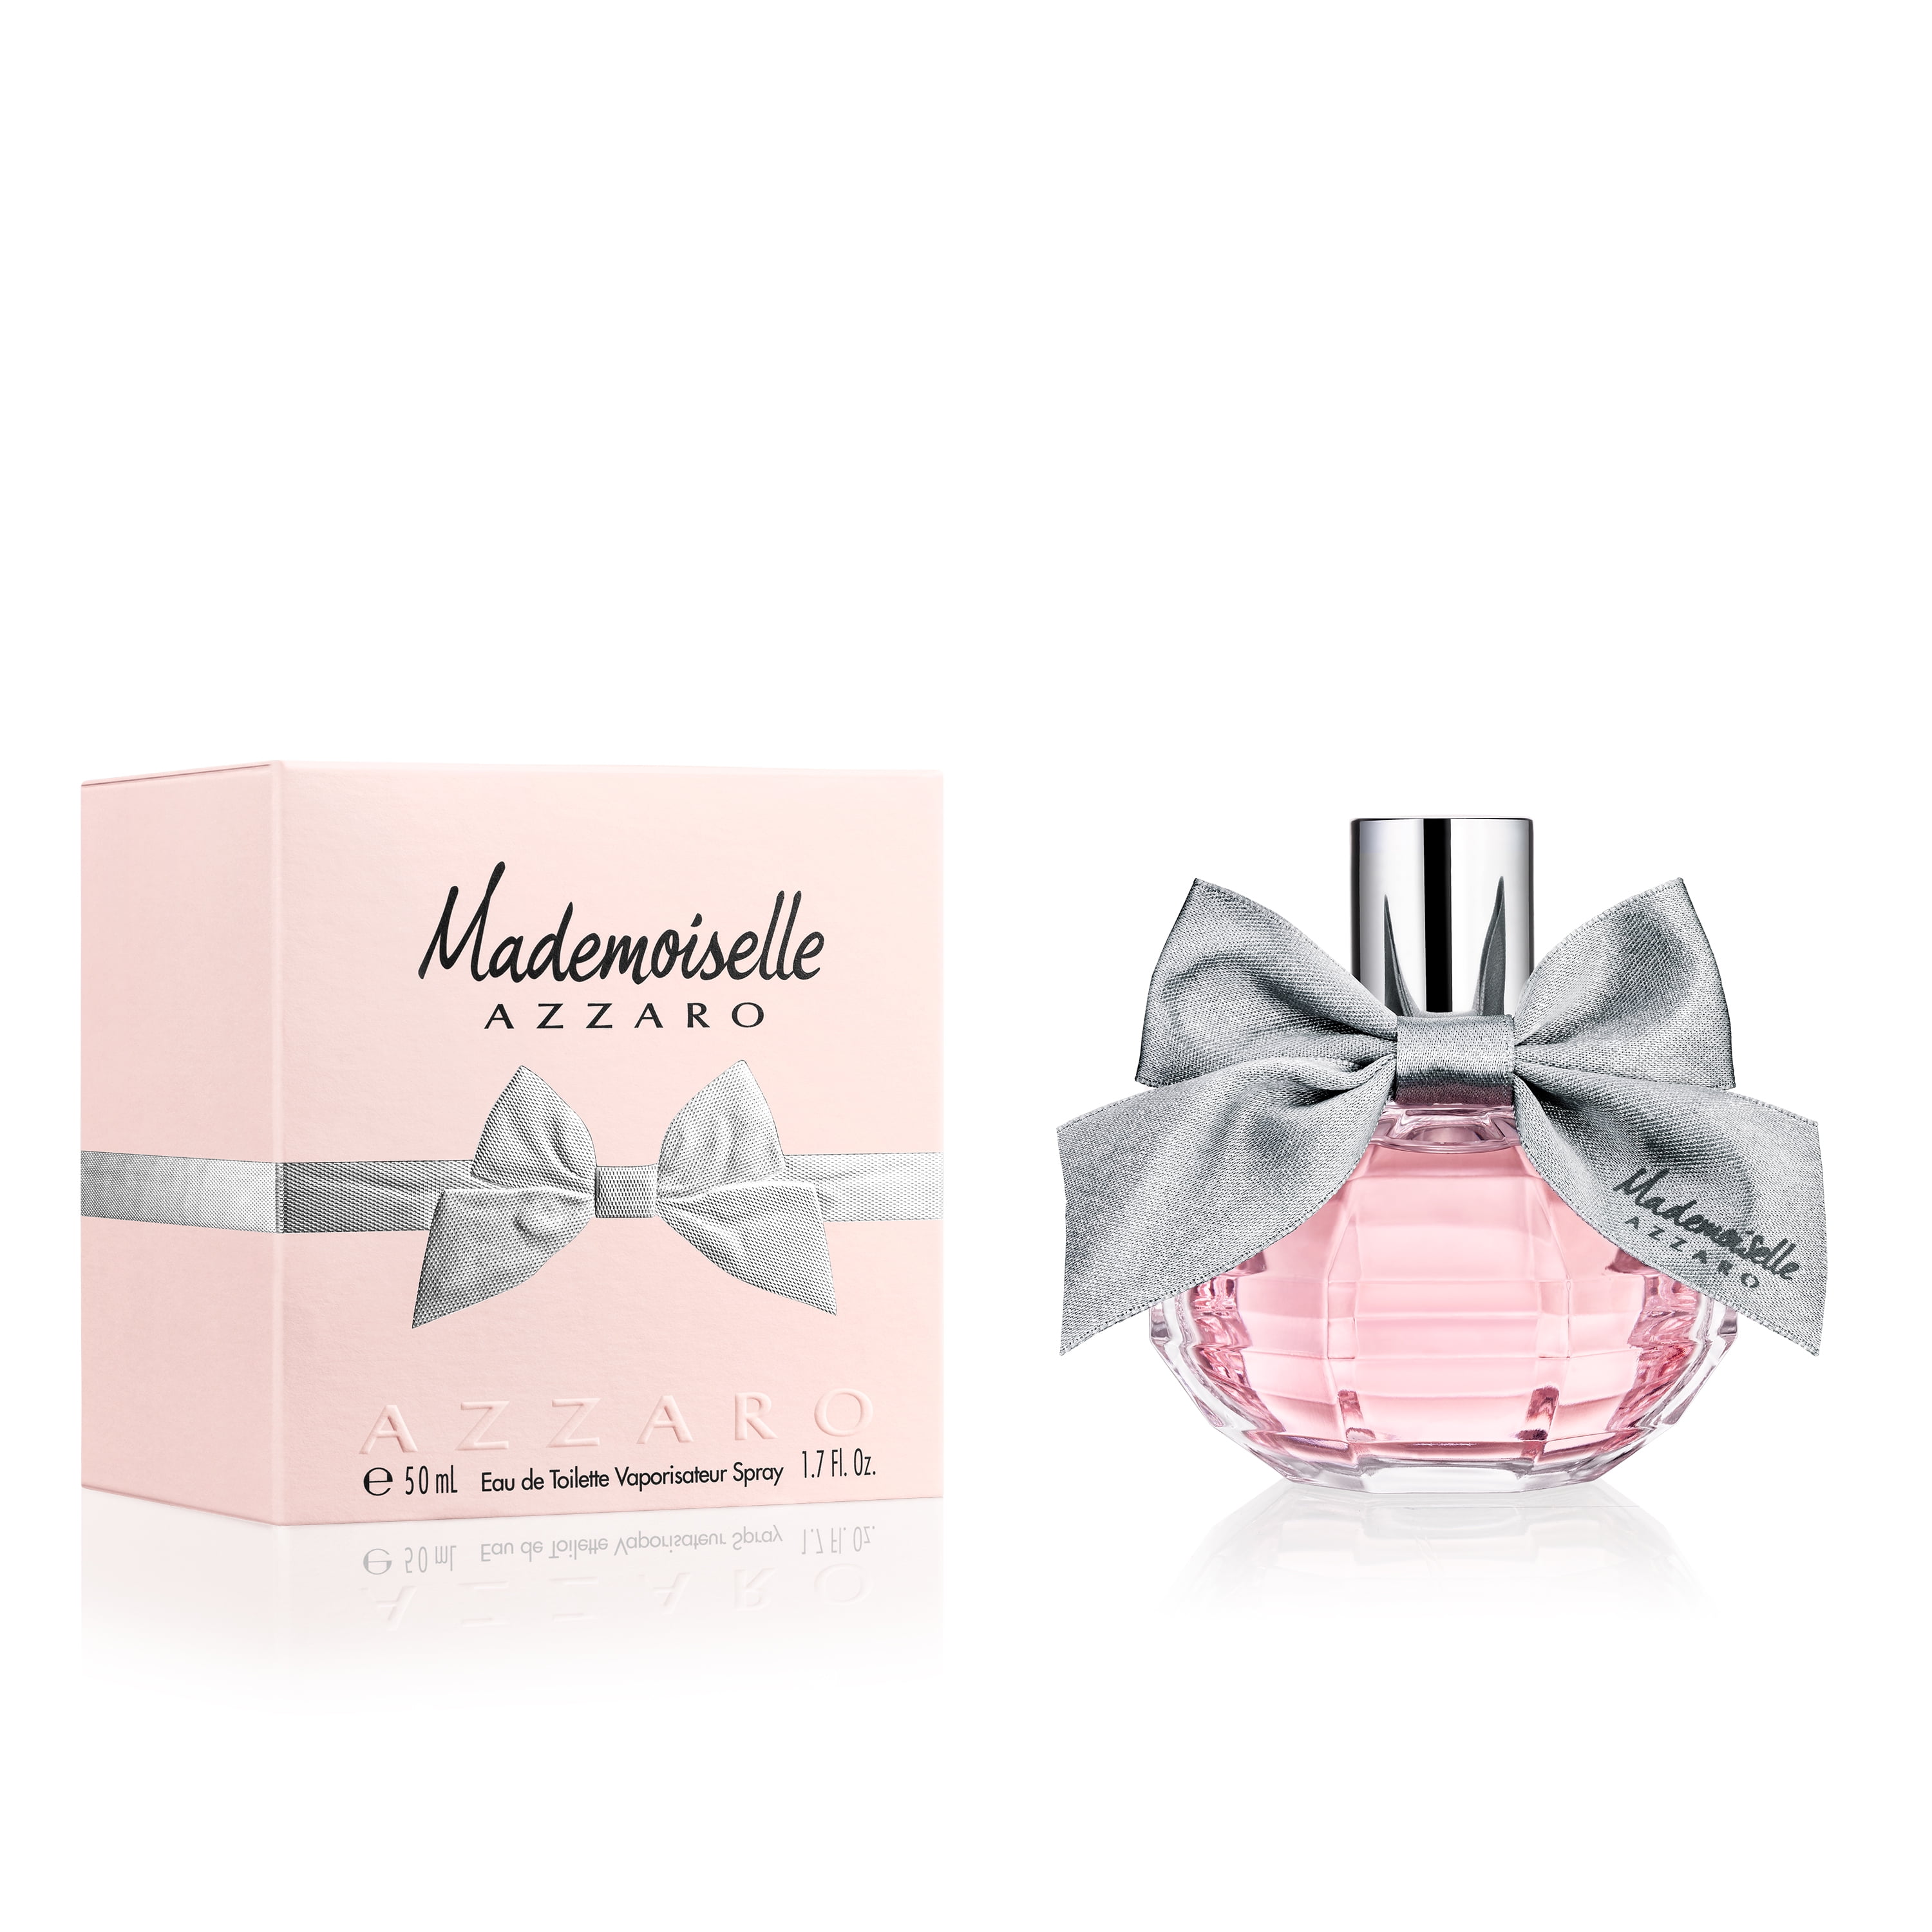 mademoiselle azzaro perfume